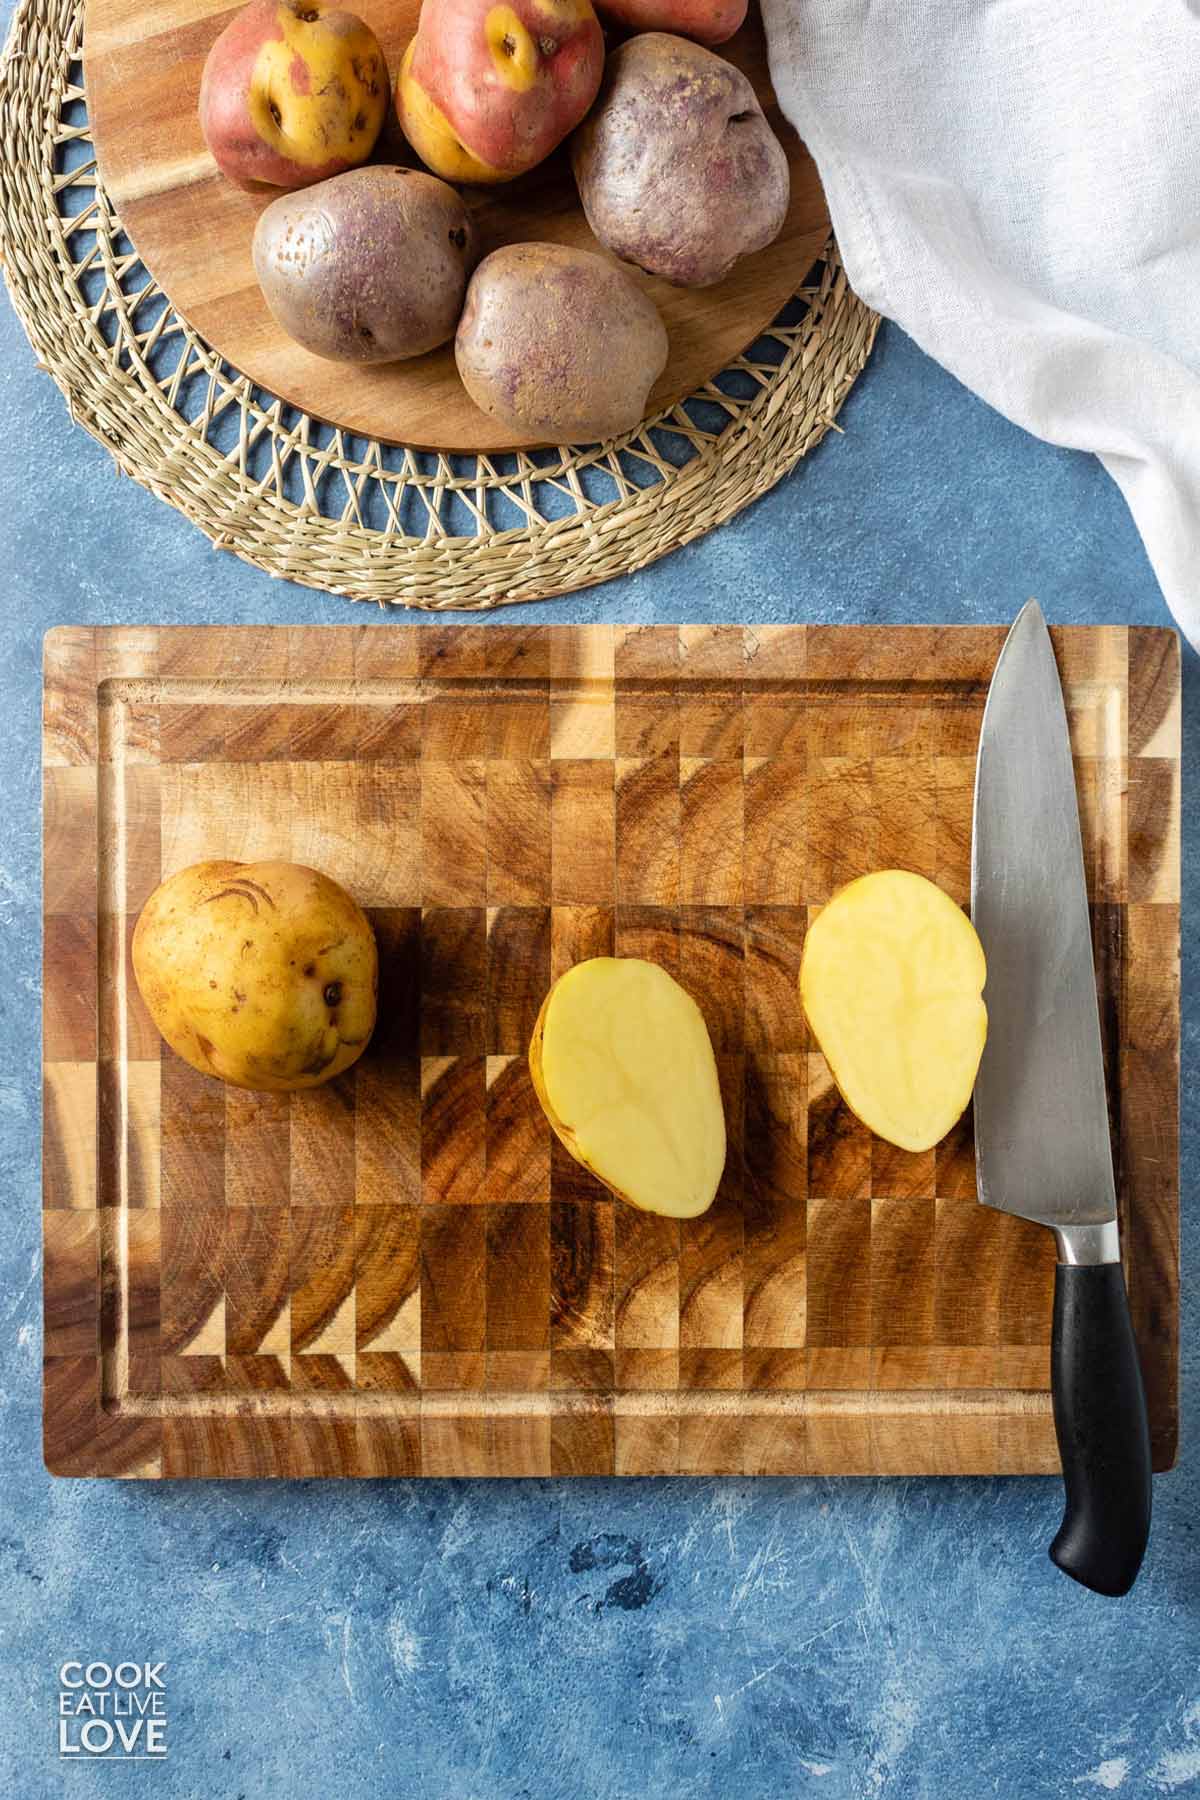 Potato cut in half.